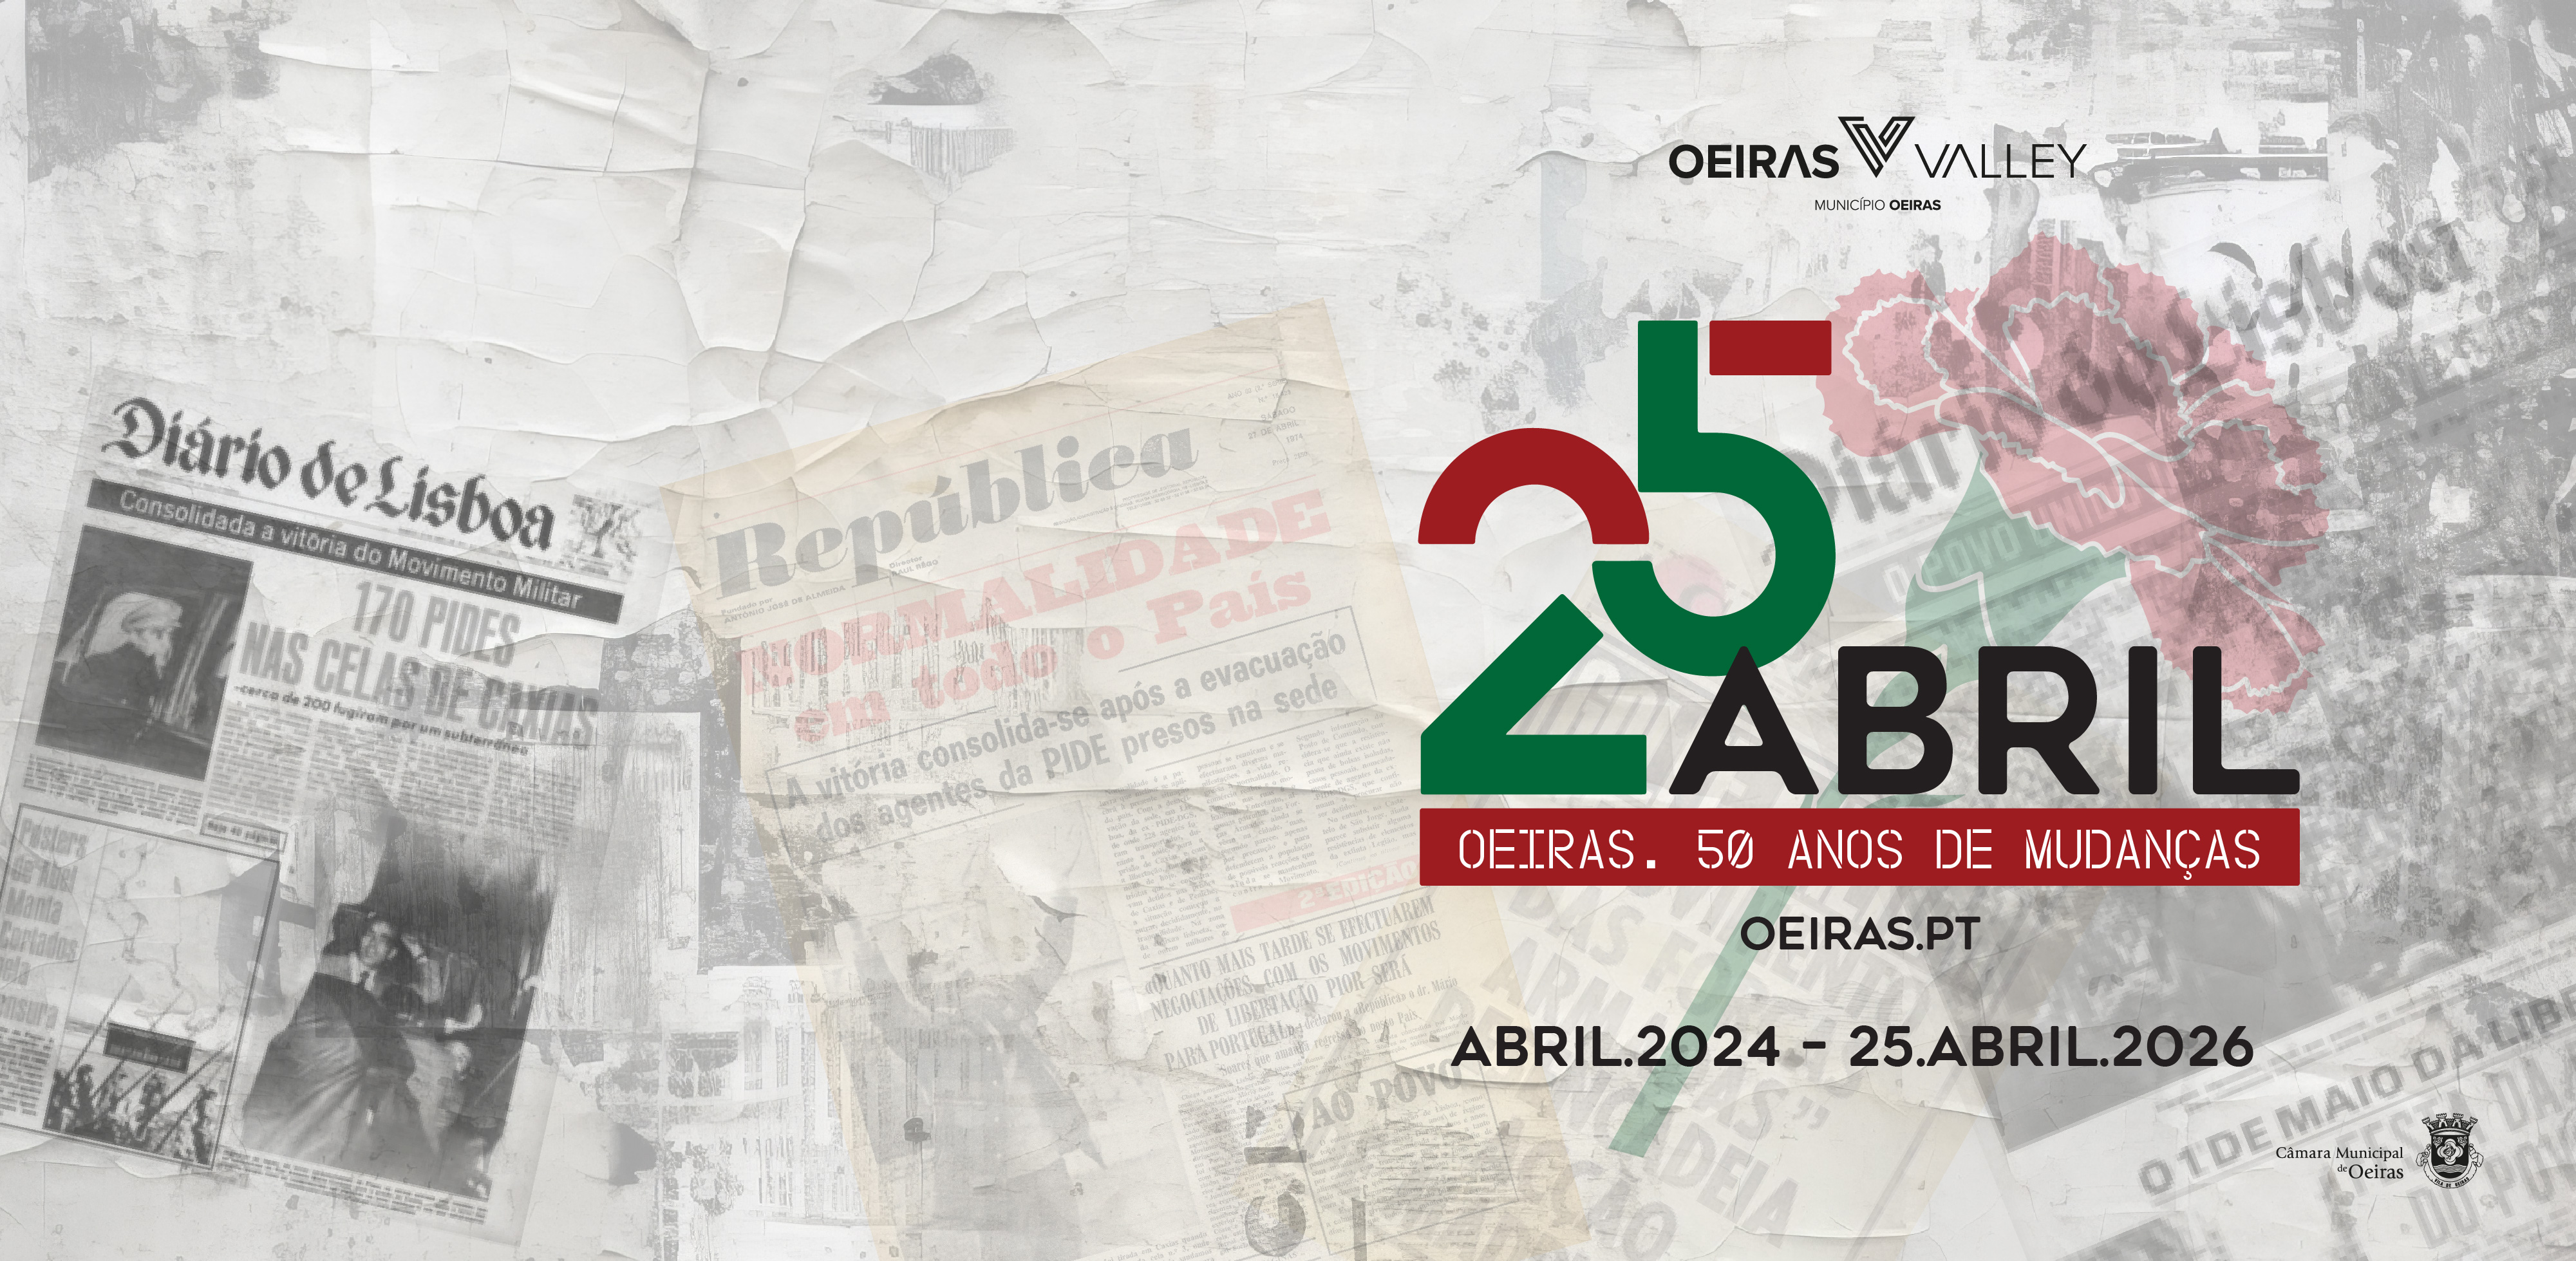 Conheça as iniciativas previstas pelo Município de Oeiras para comemorar os 50 anos do 25 de Abril.